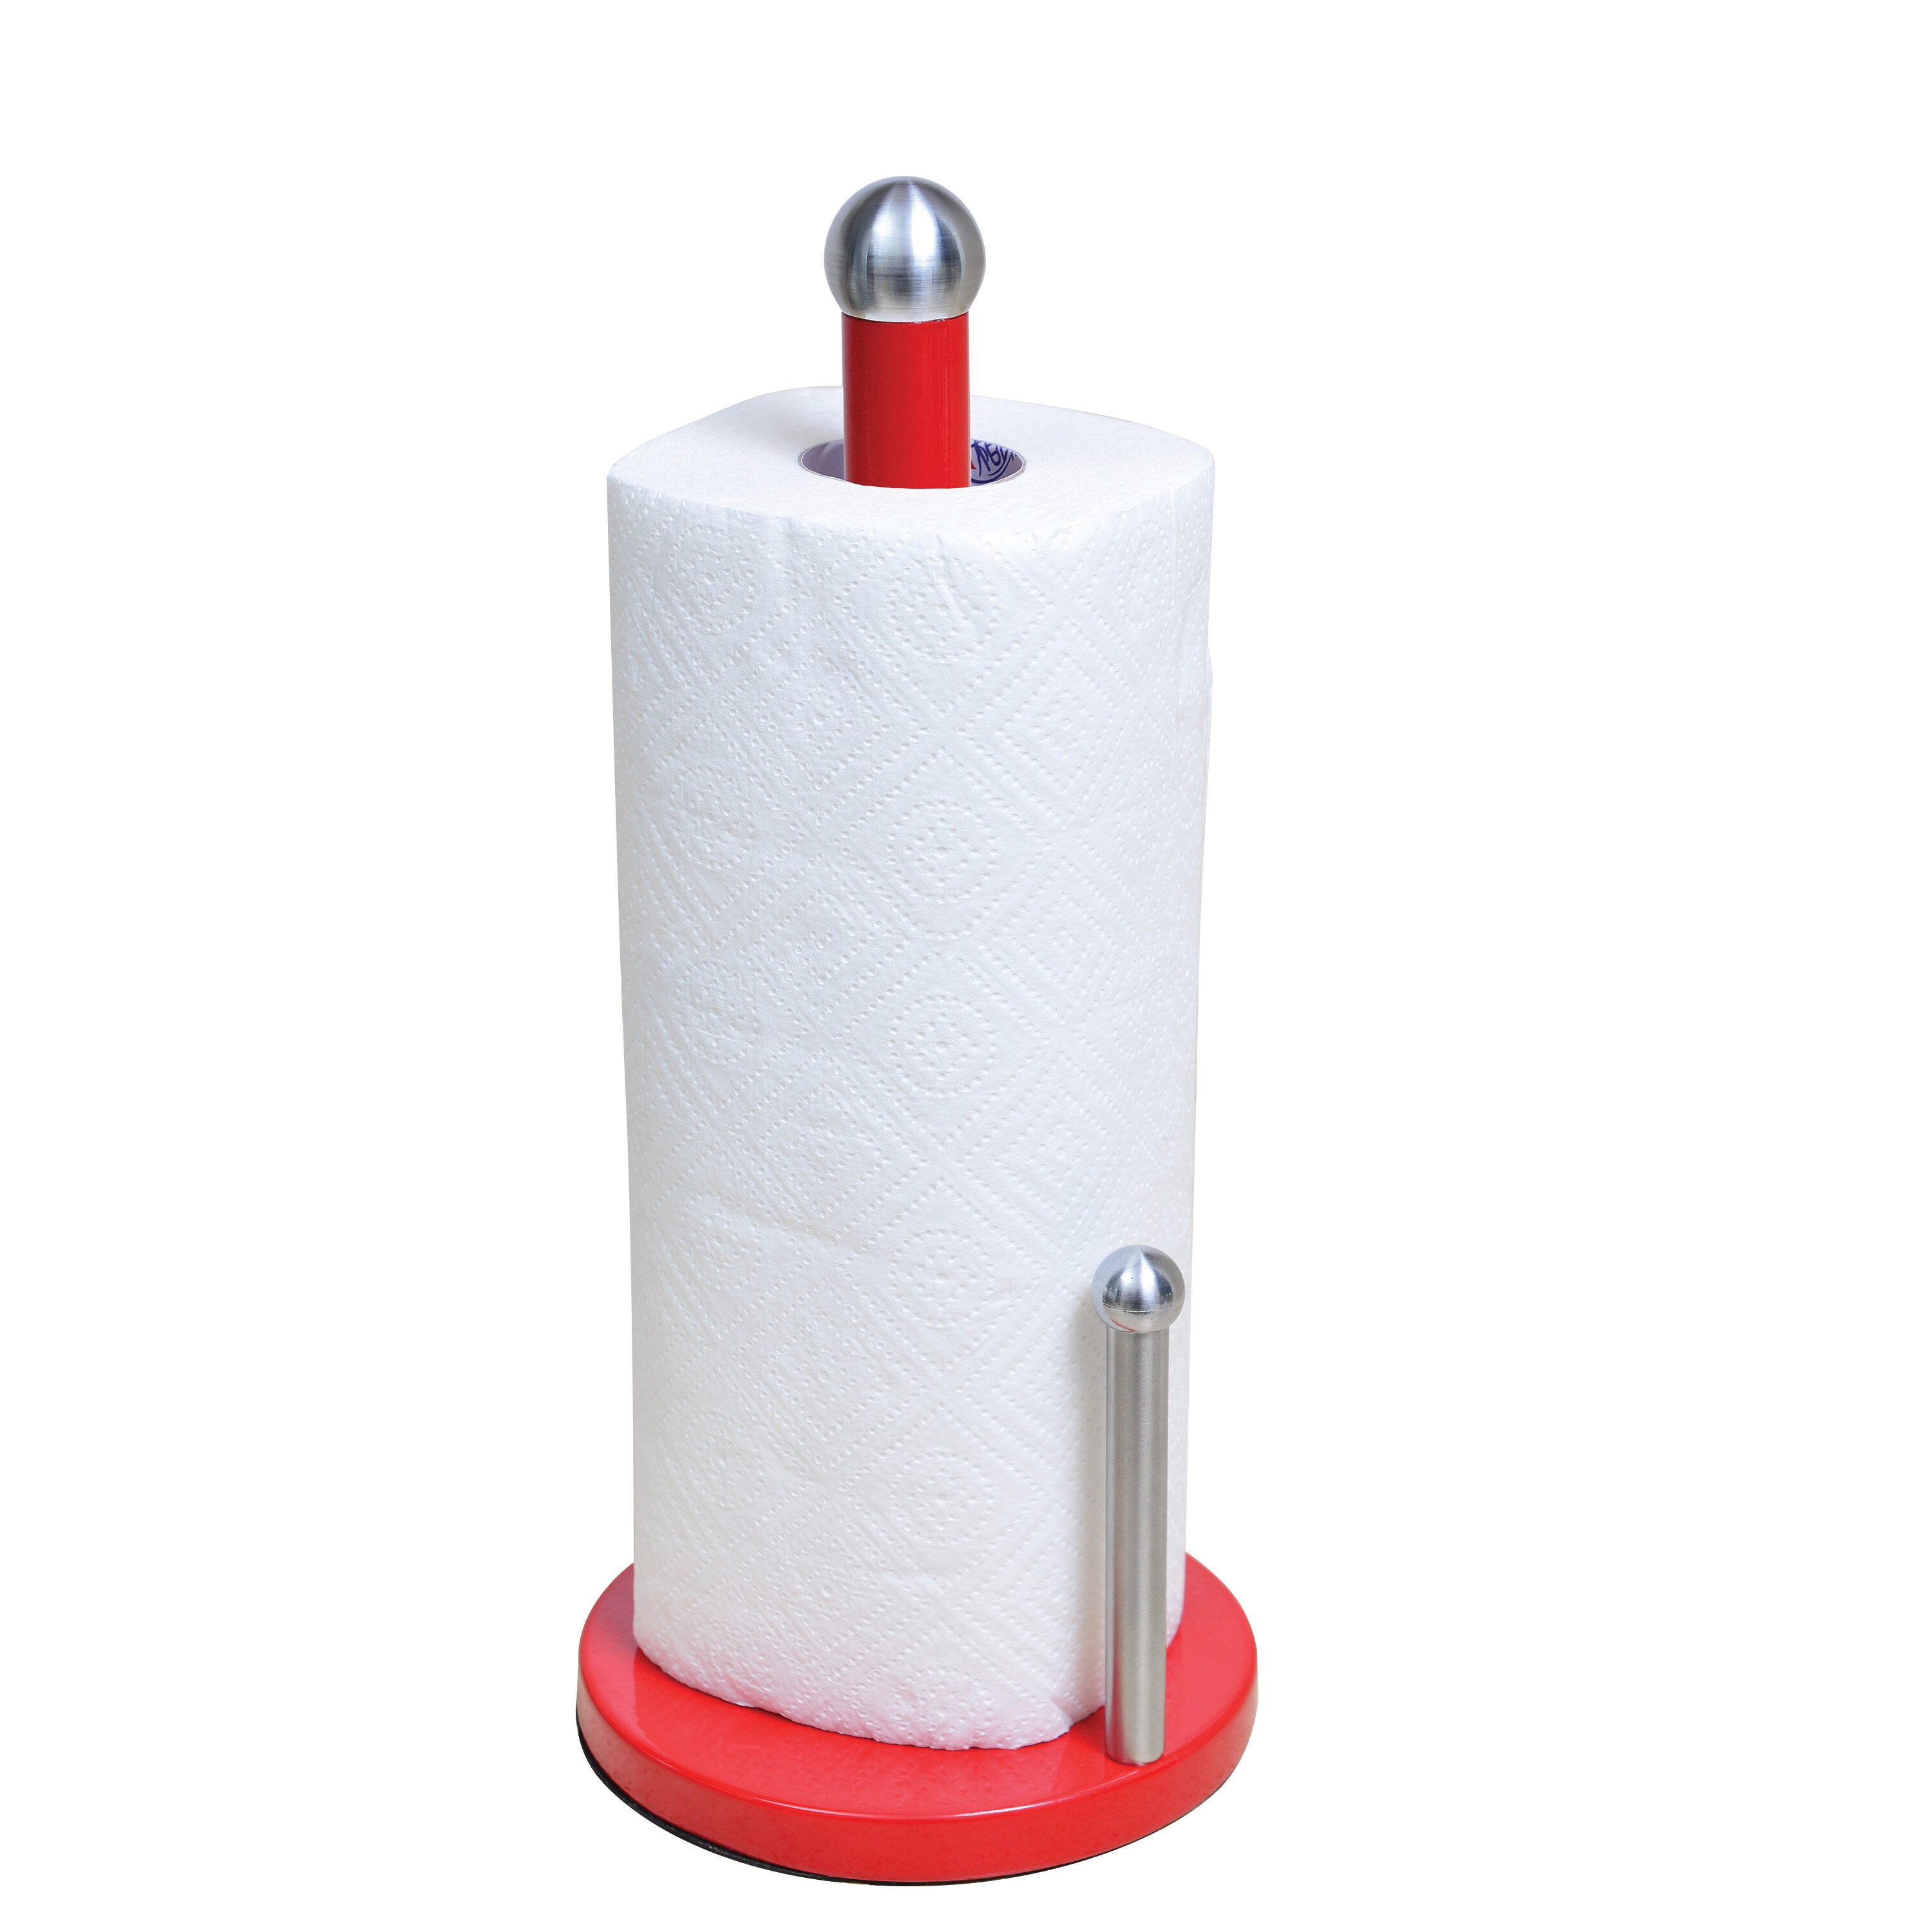 Wholesale 12.5 Chrome Paper Towel Upright Holder